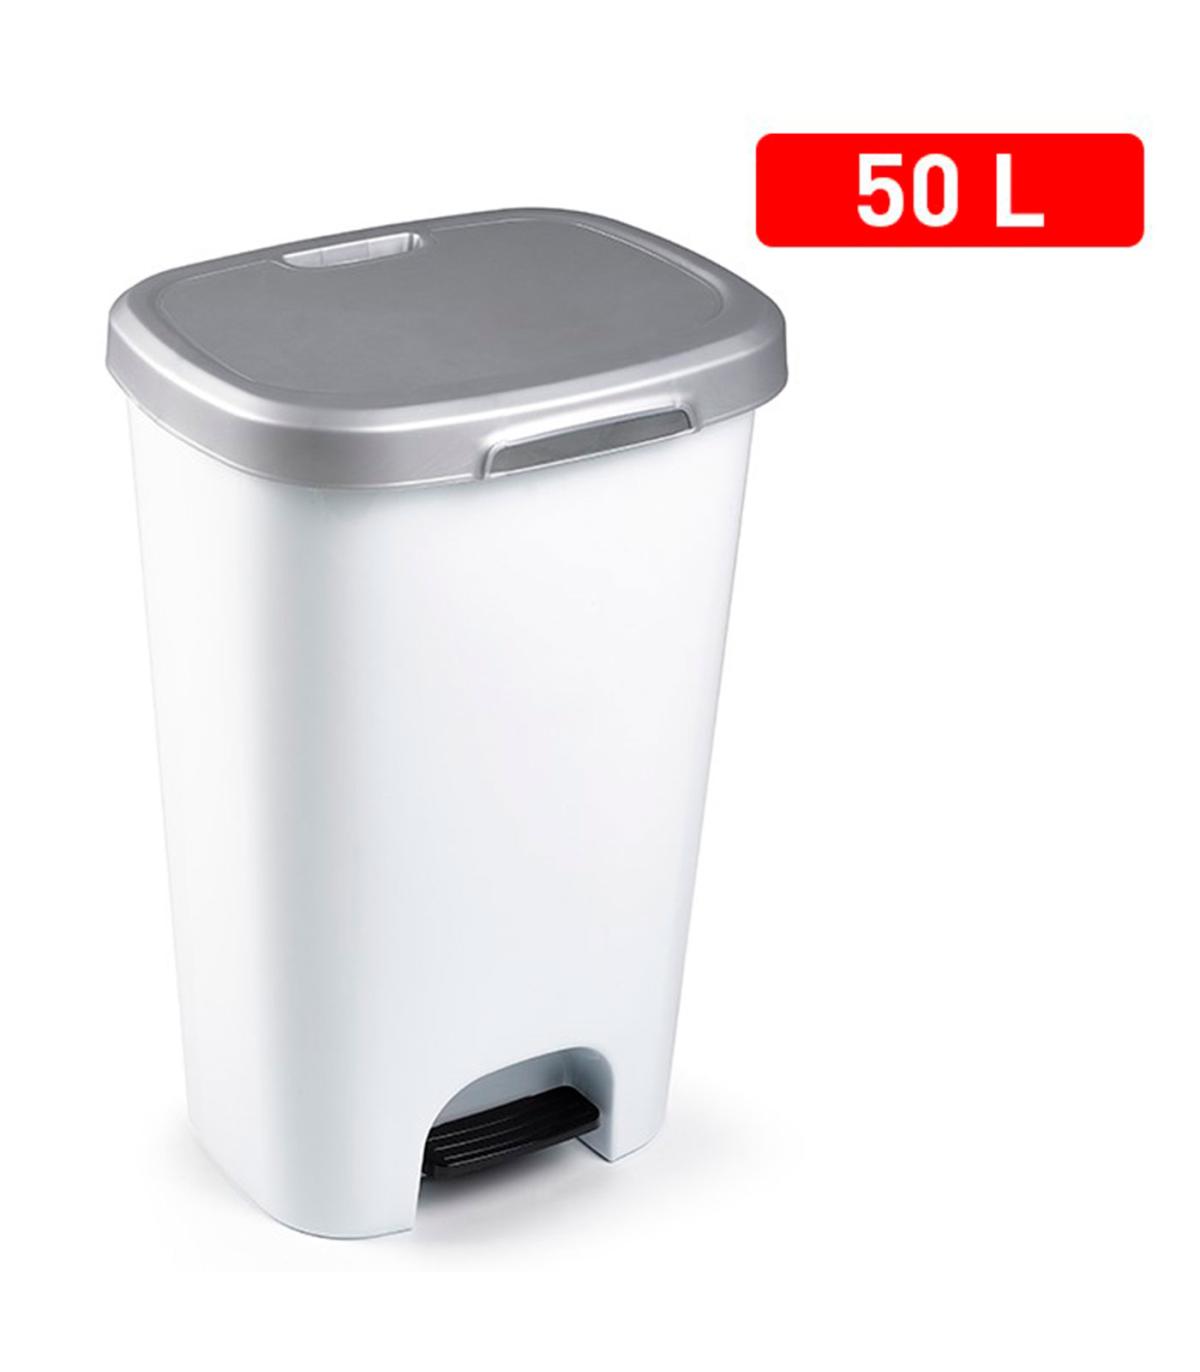 Tradineur - Cubo basura de plástico con pedal, contenedor de residuos,  papelera con tapa, fabricado en España (Gris plata y blan